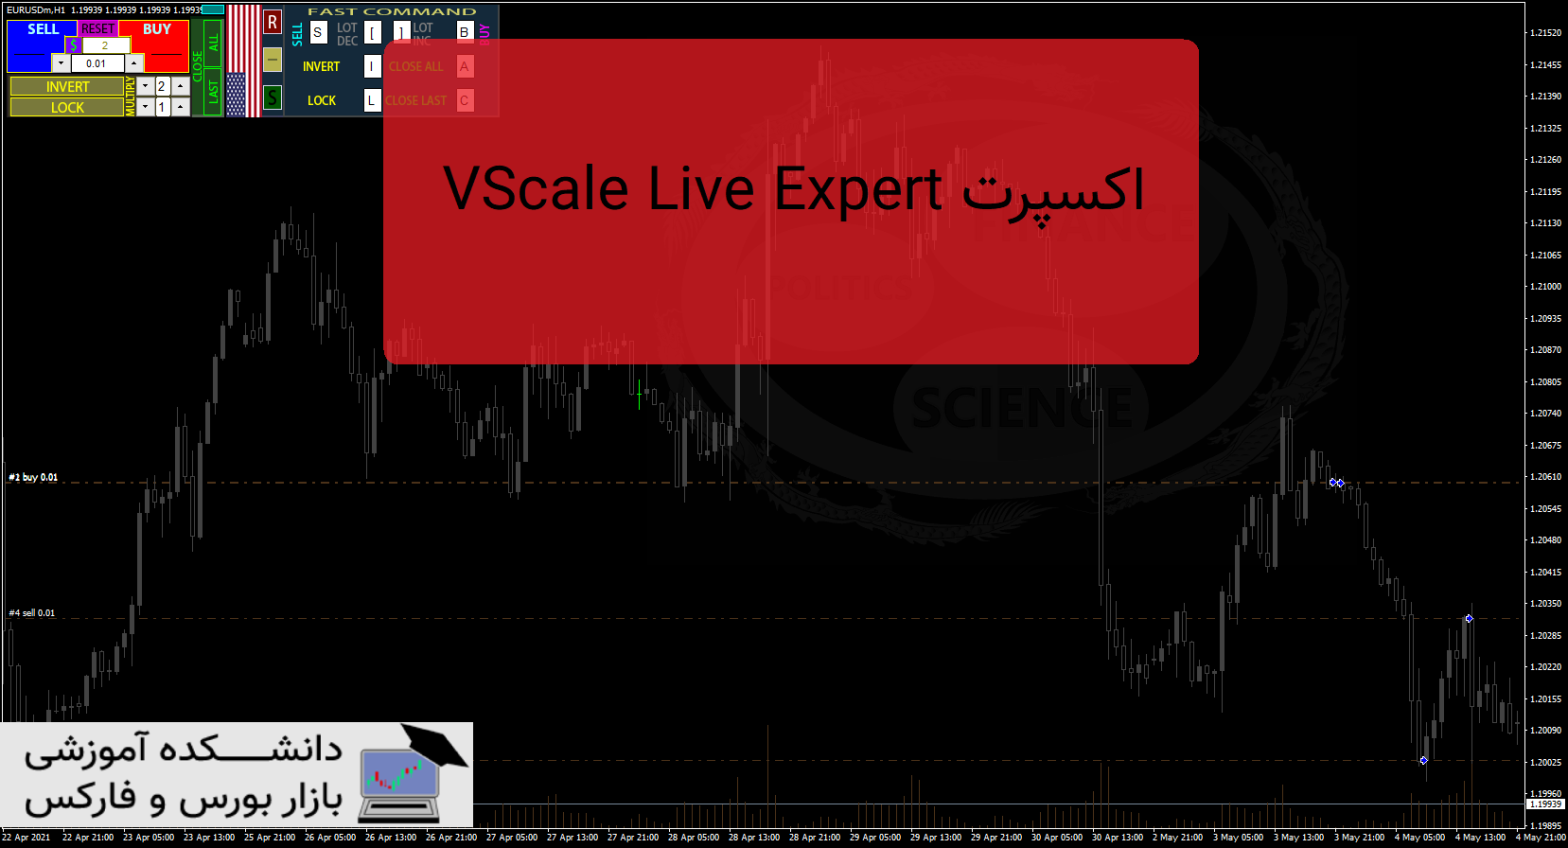 VScale Live Expert دانلود و معرفی اکسپرت